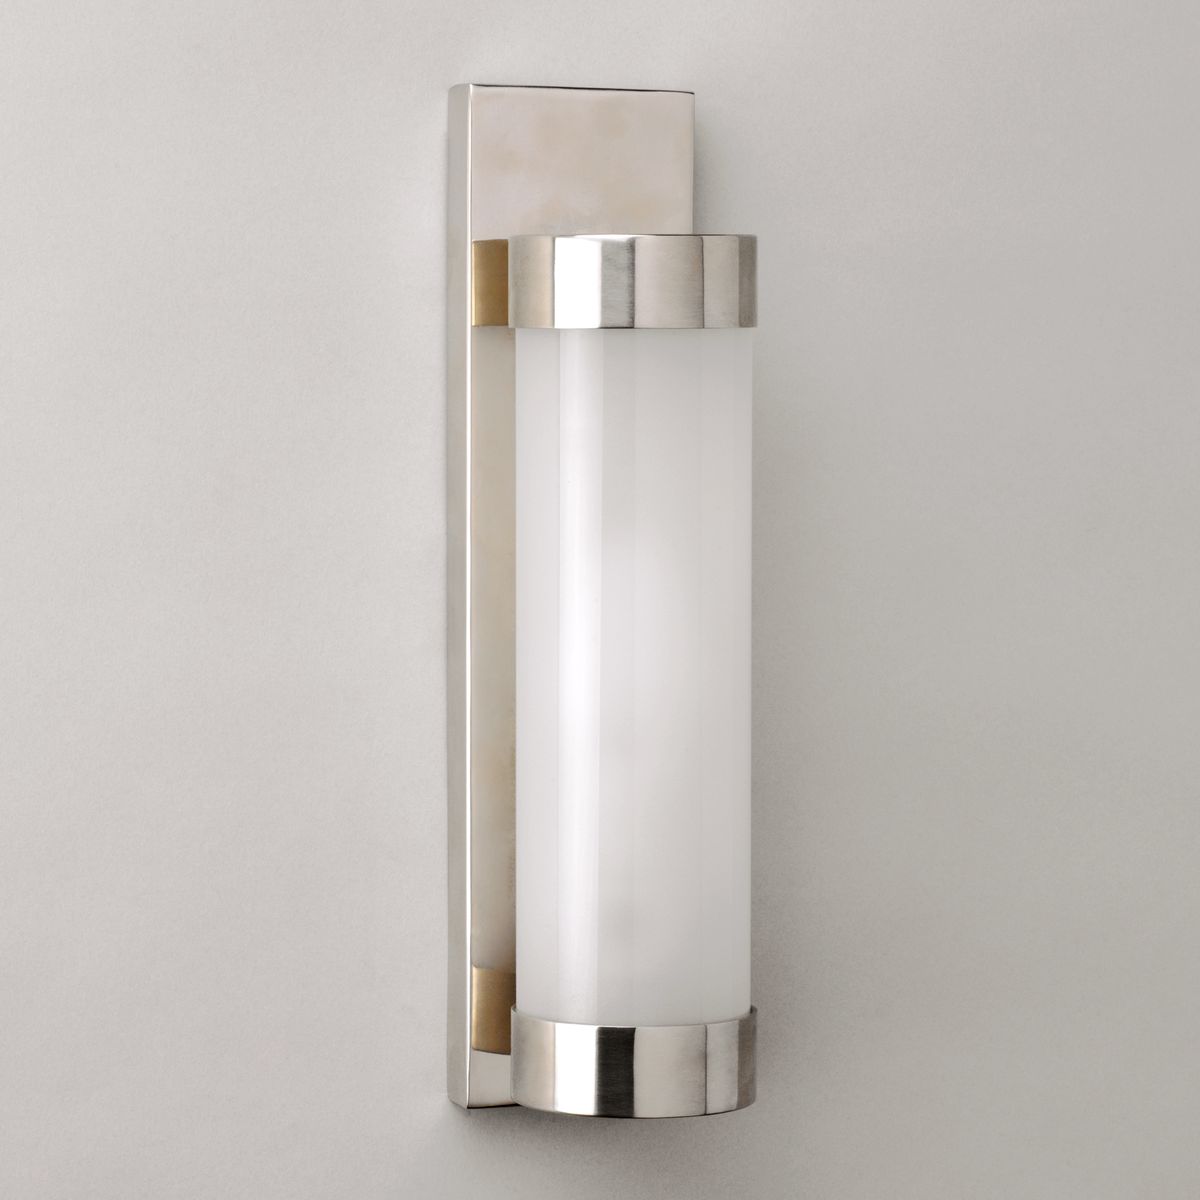 Art Deco bathroom wall light in nickel